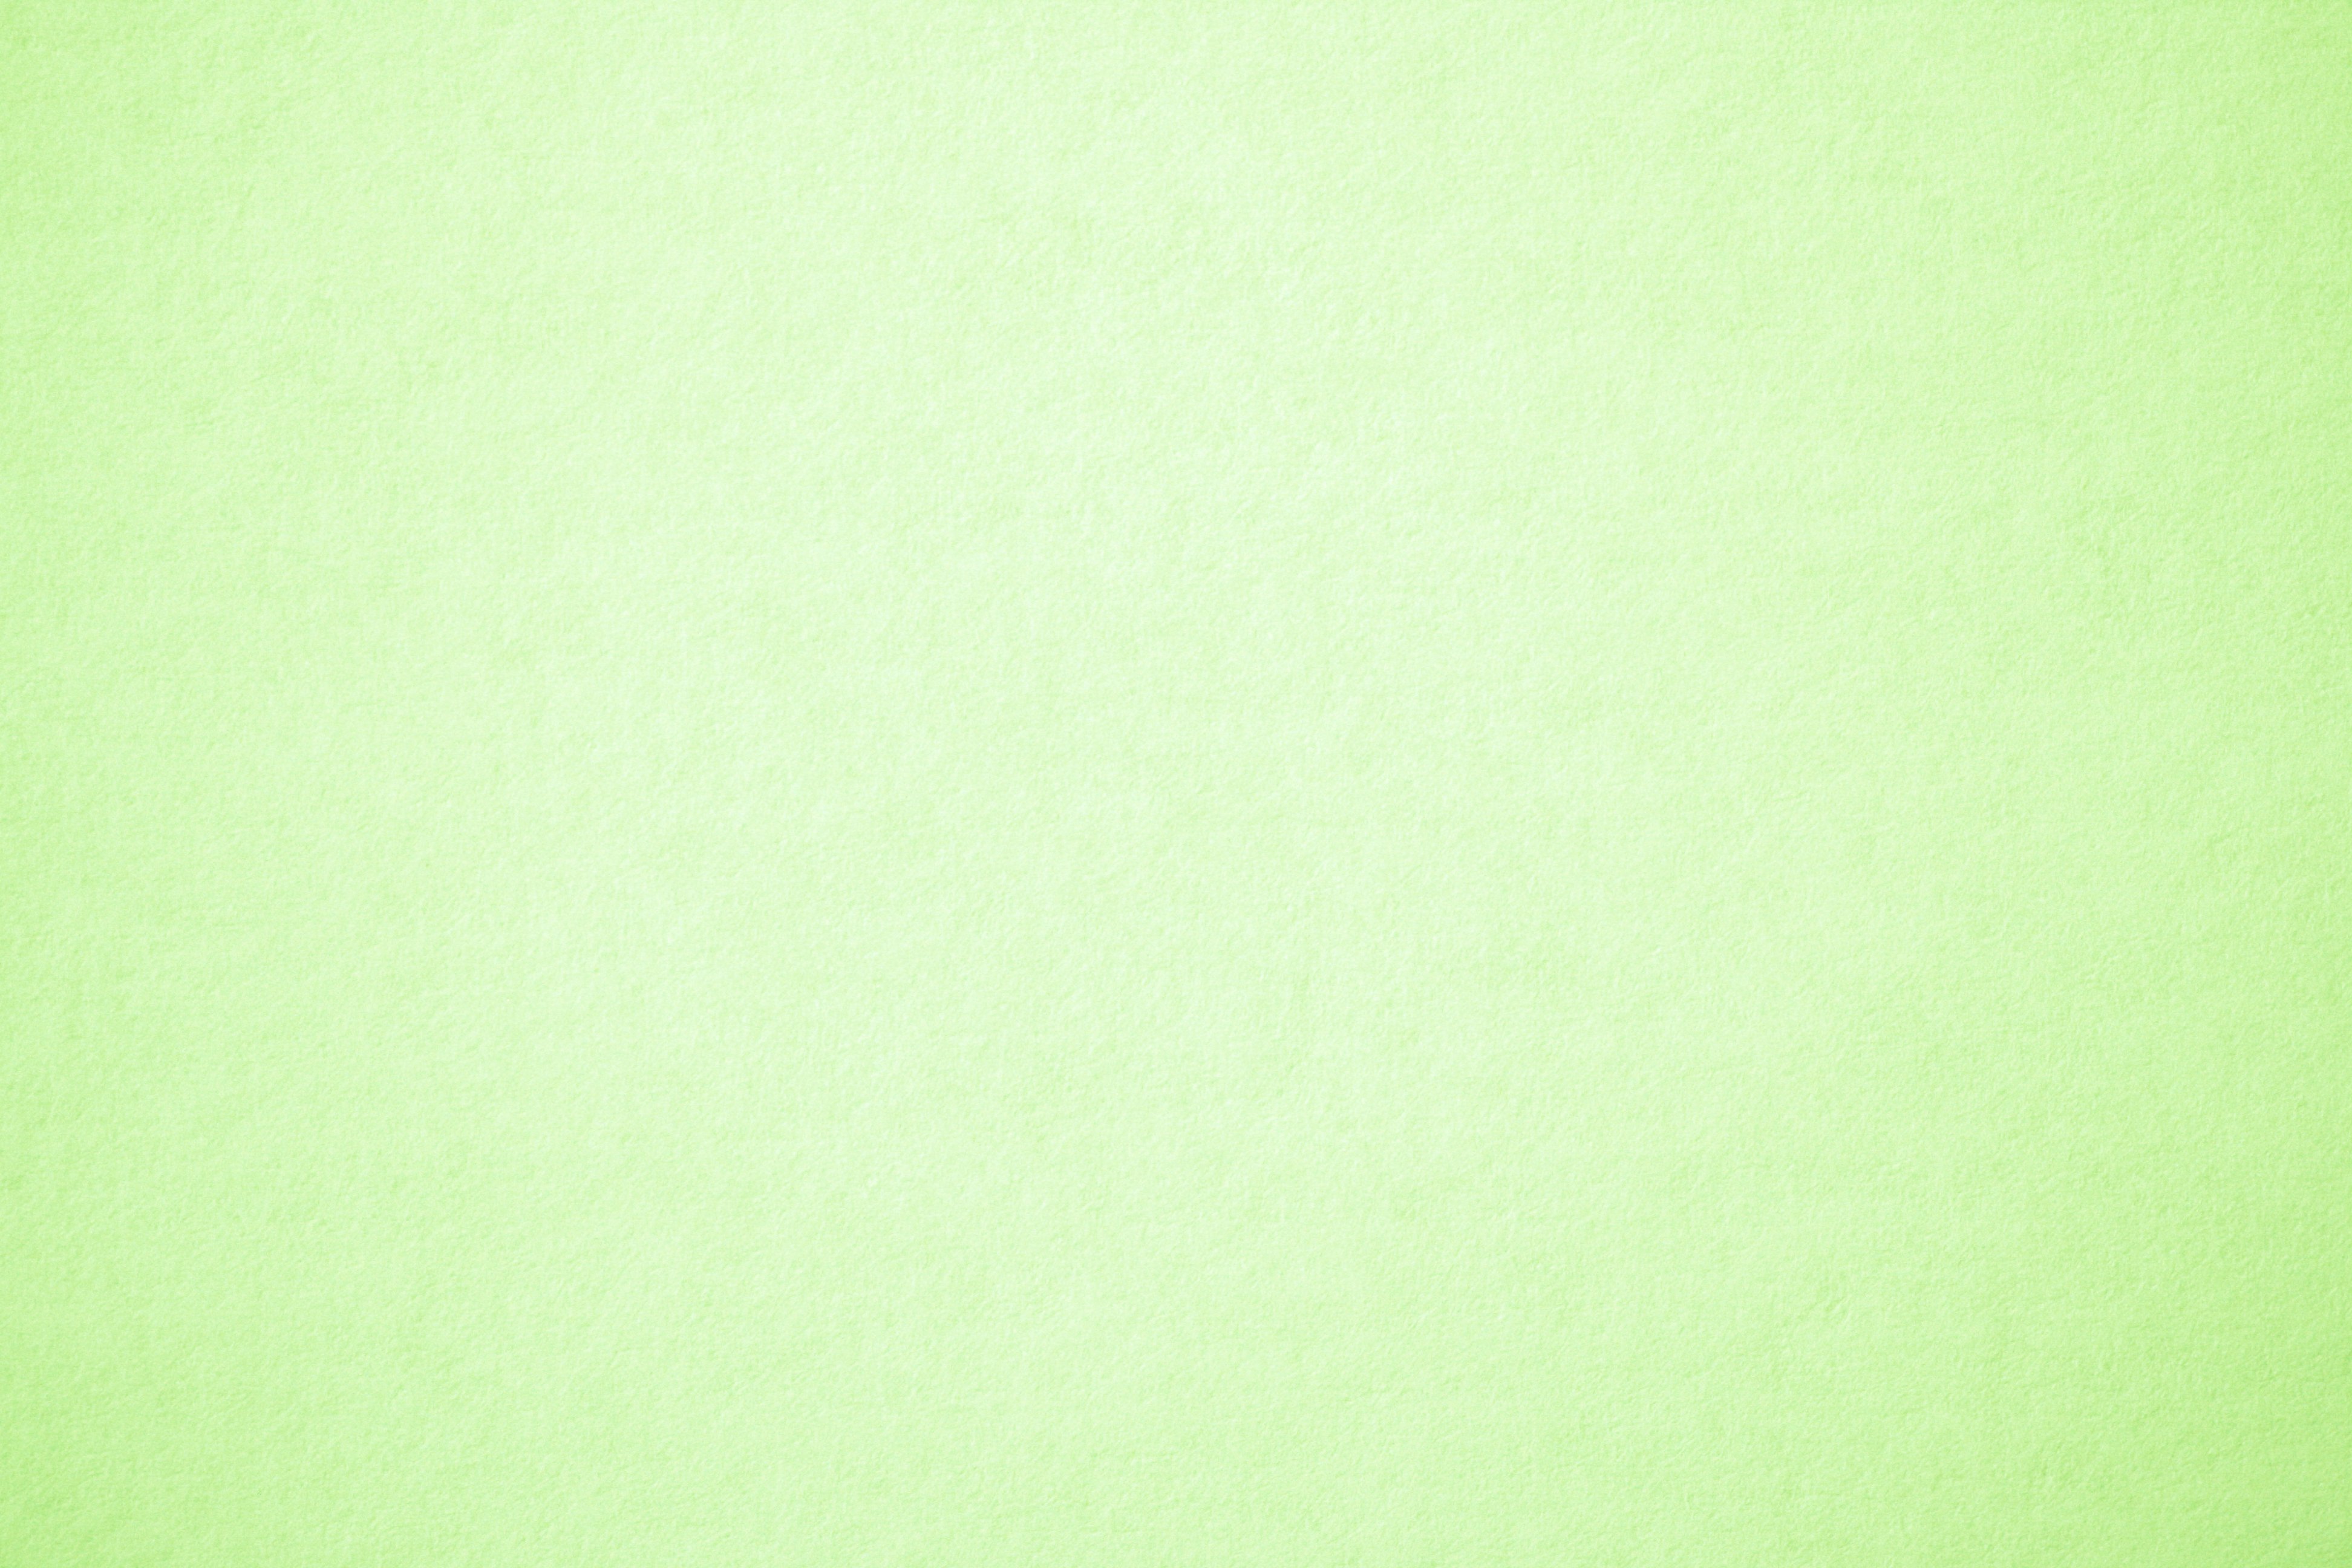 Pastel Green Paper Texture Picture | Free Photograph | Photos Public Domain